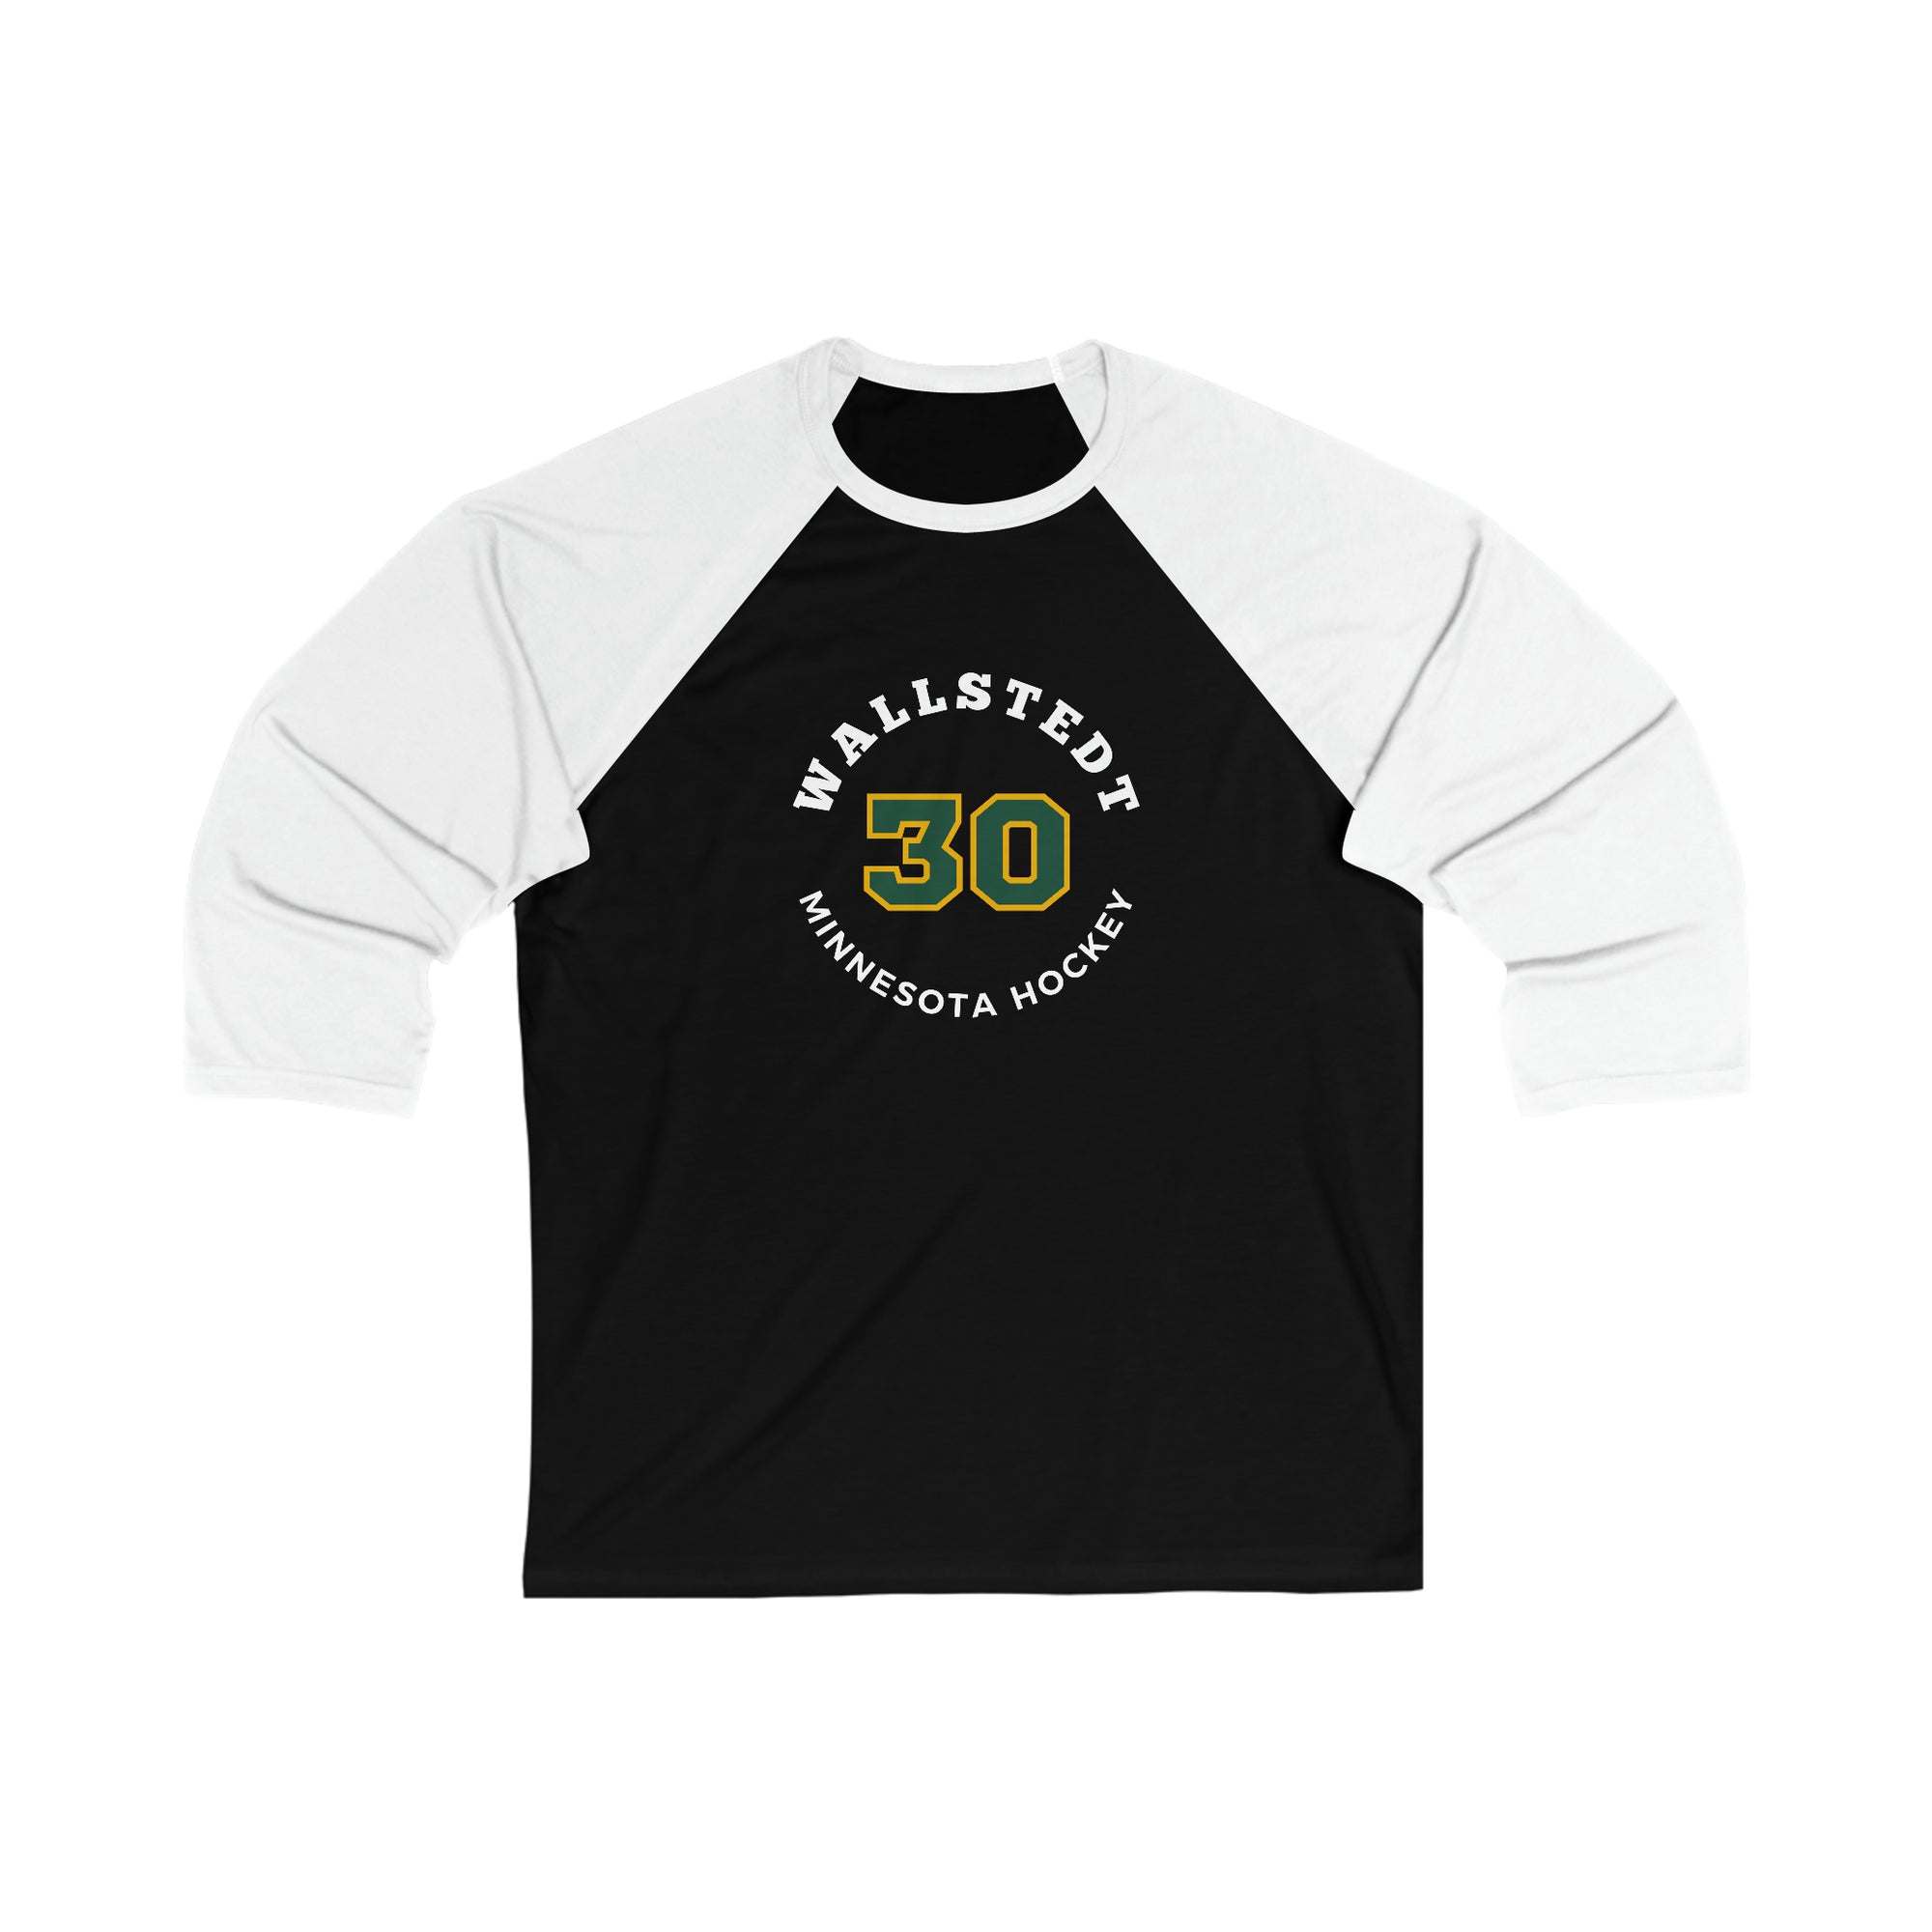 Wallstedt 30 Minnesota Hockey Number Arch Design Unisex Tri-Blend 3/4 Sleeve Raglan Baseball Shirt